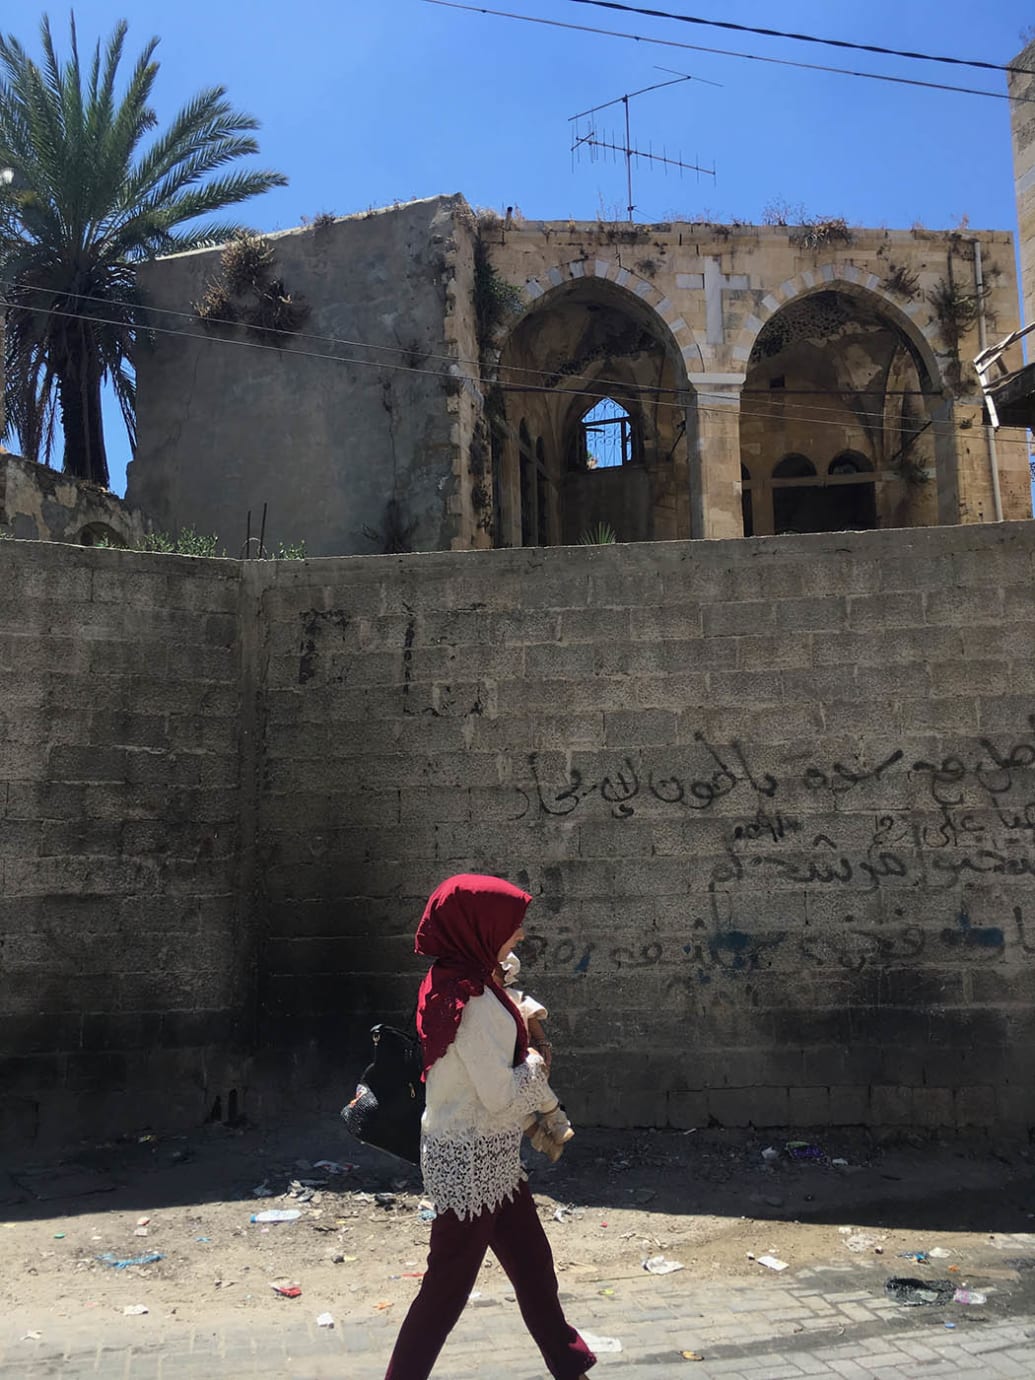 Gaza Historical Photos and Memorabilia Find Permanent Home